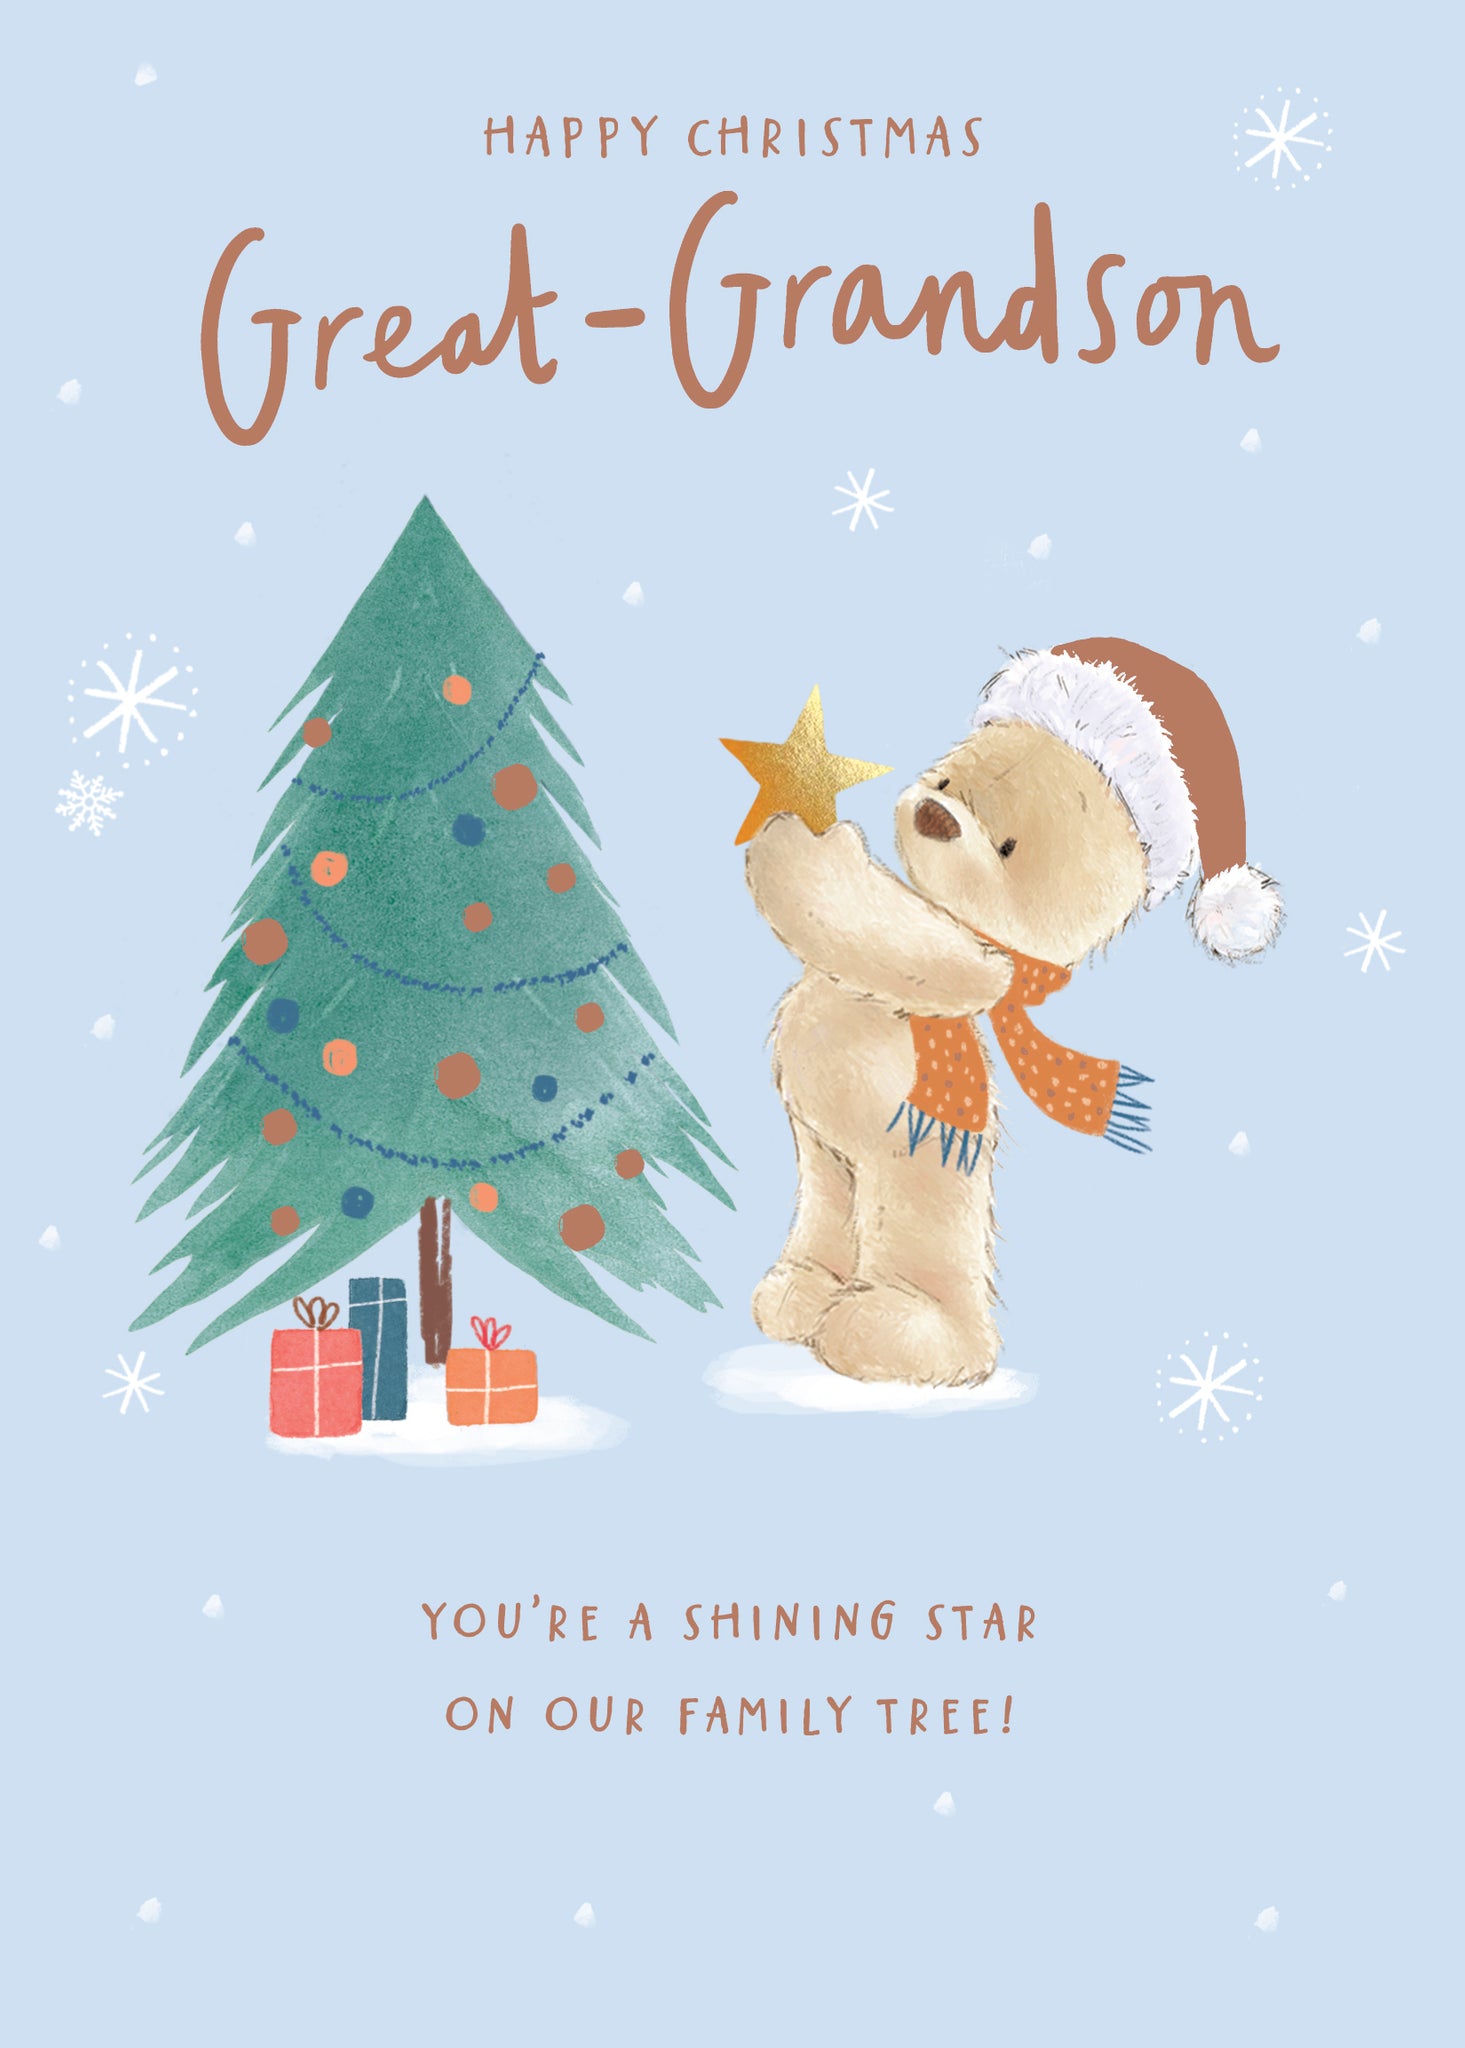 Great Grandson Christmas card - cute bear